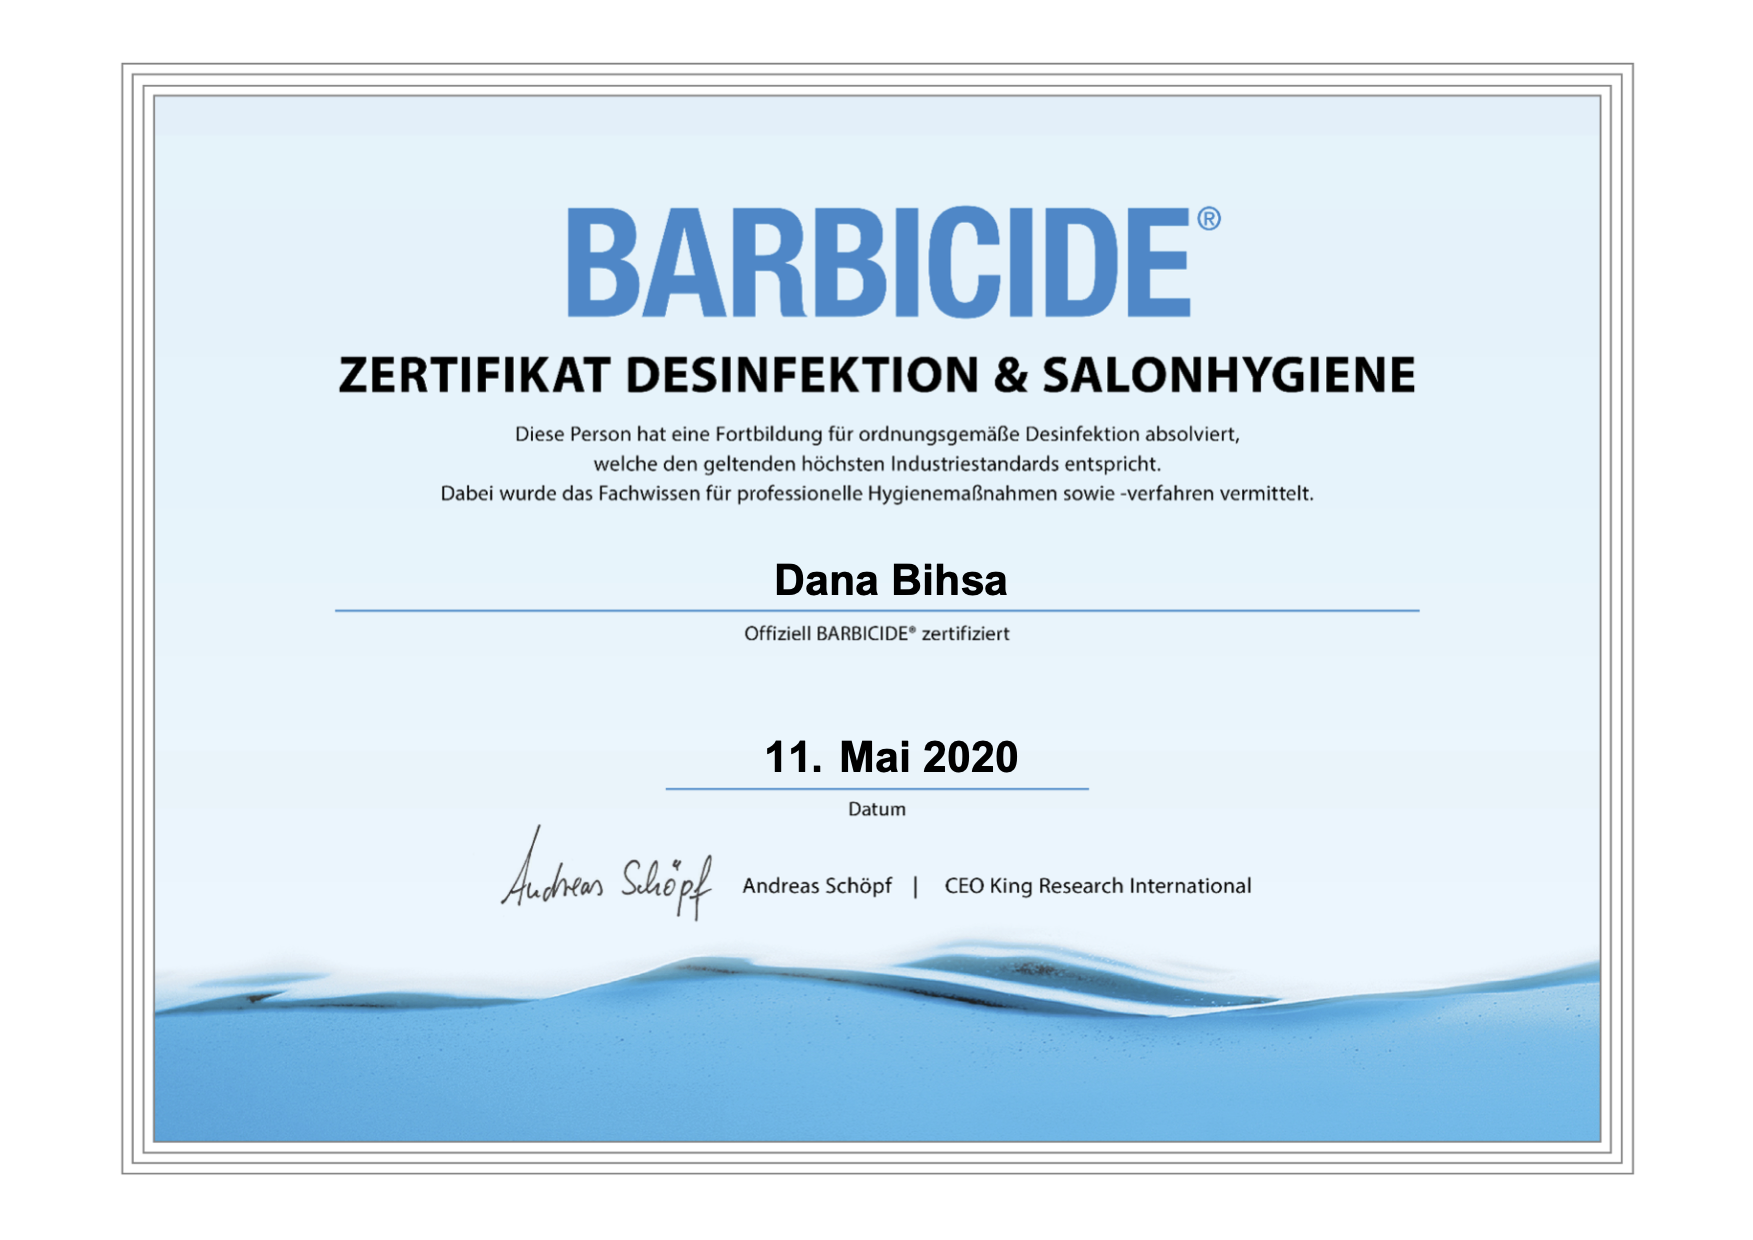 Barbicide Zertifikat Desinfektion & Salonhygiene